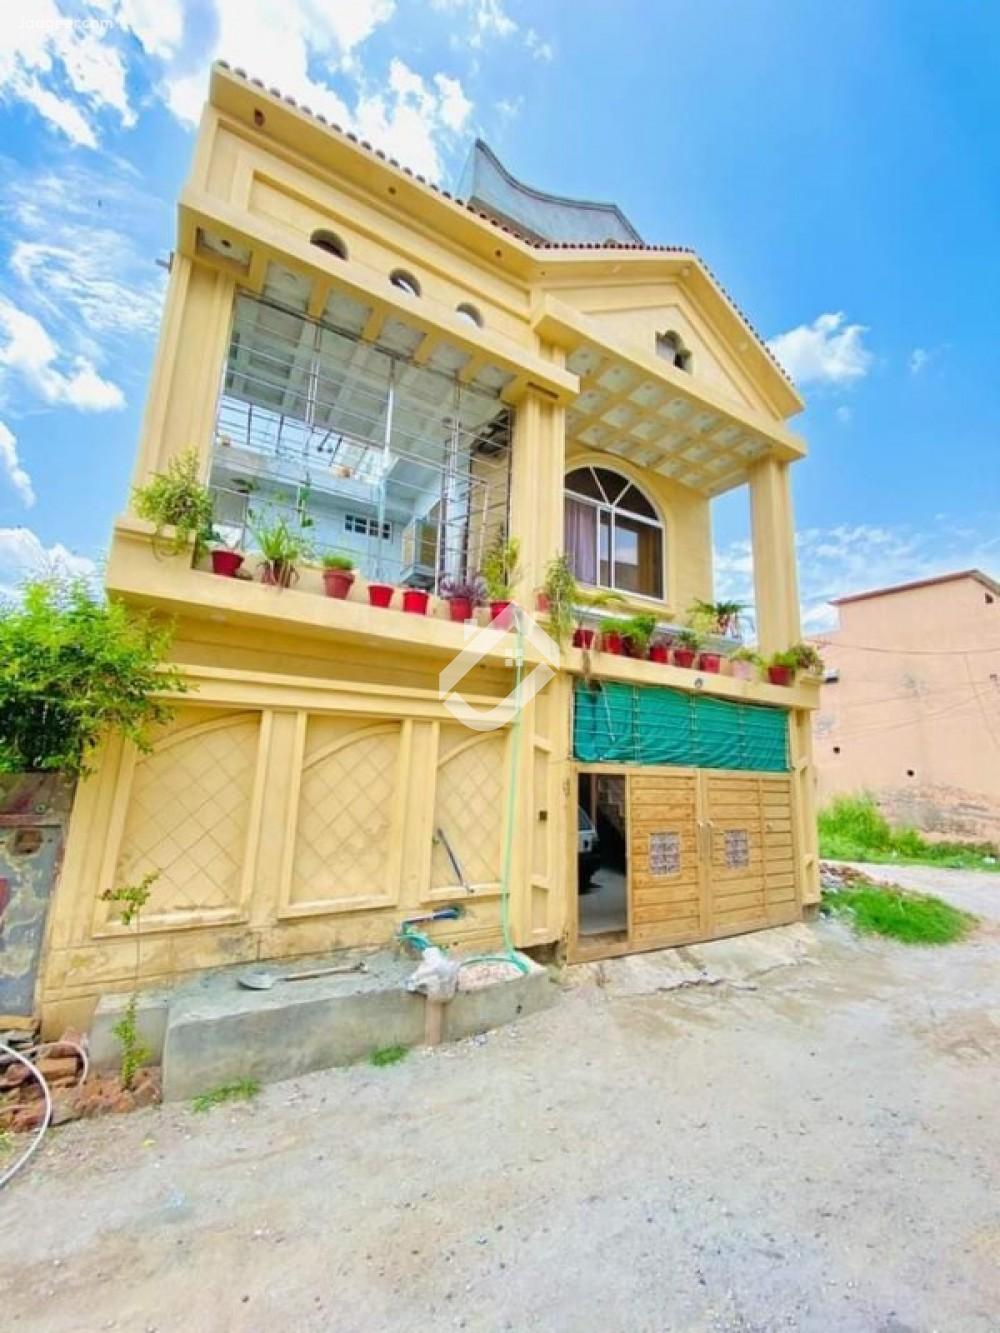 View  7 Marla House For Sale At Adyala Road  in Adyala Road, Rawalpindi